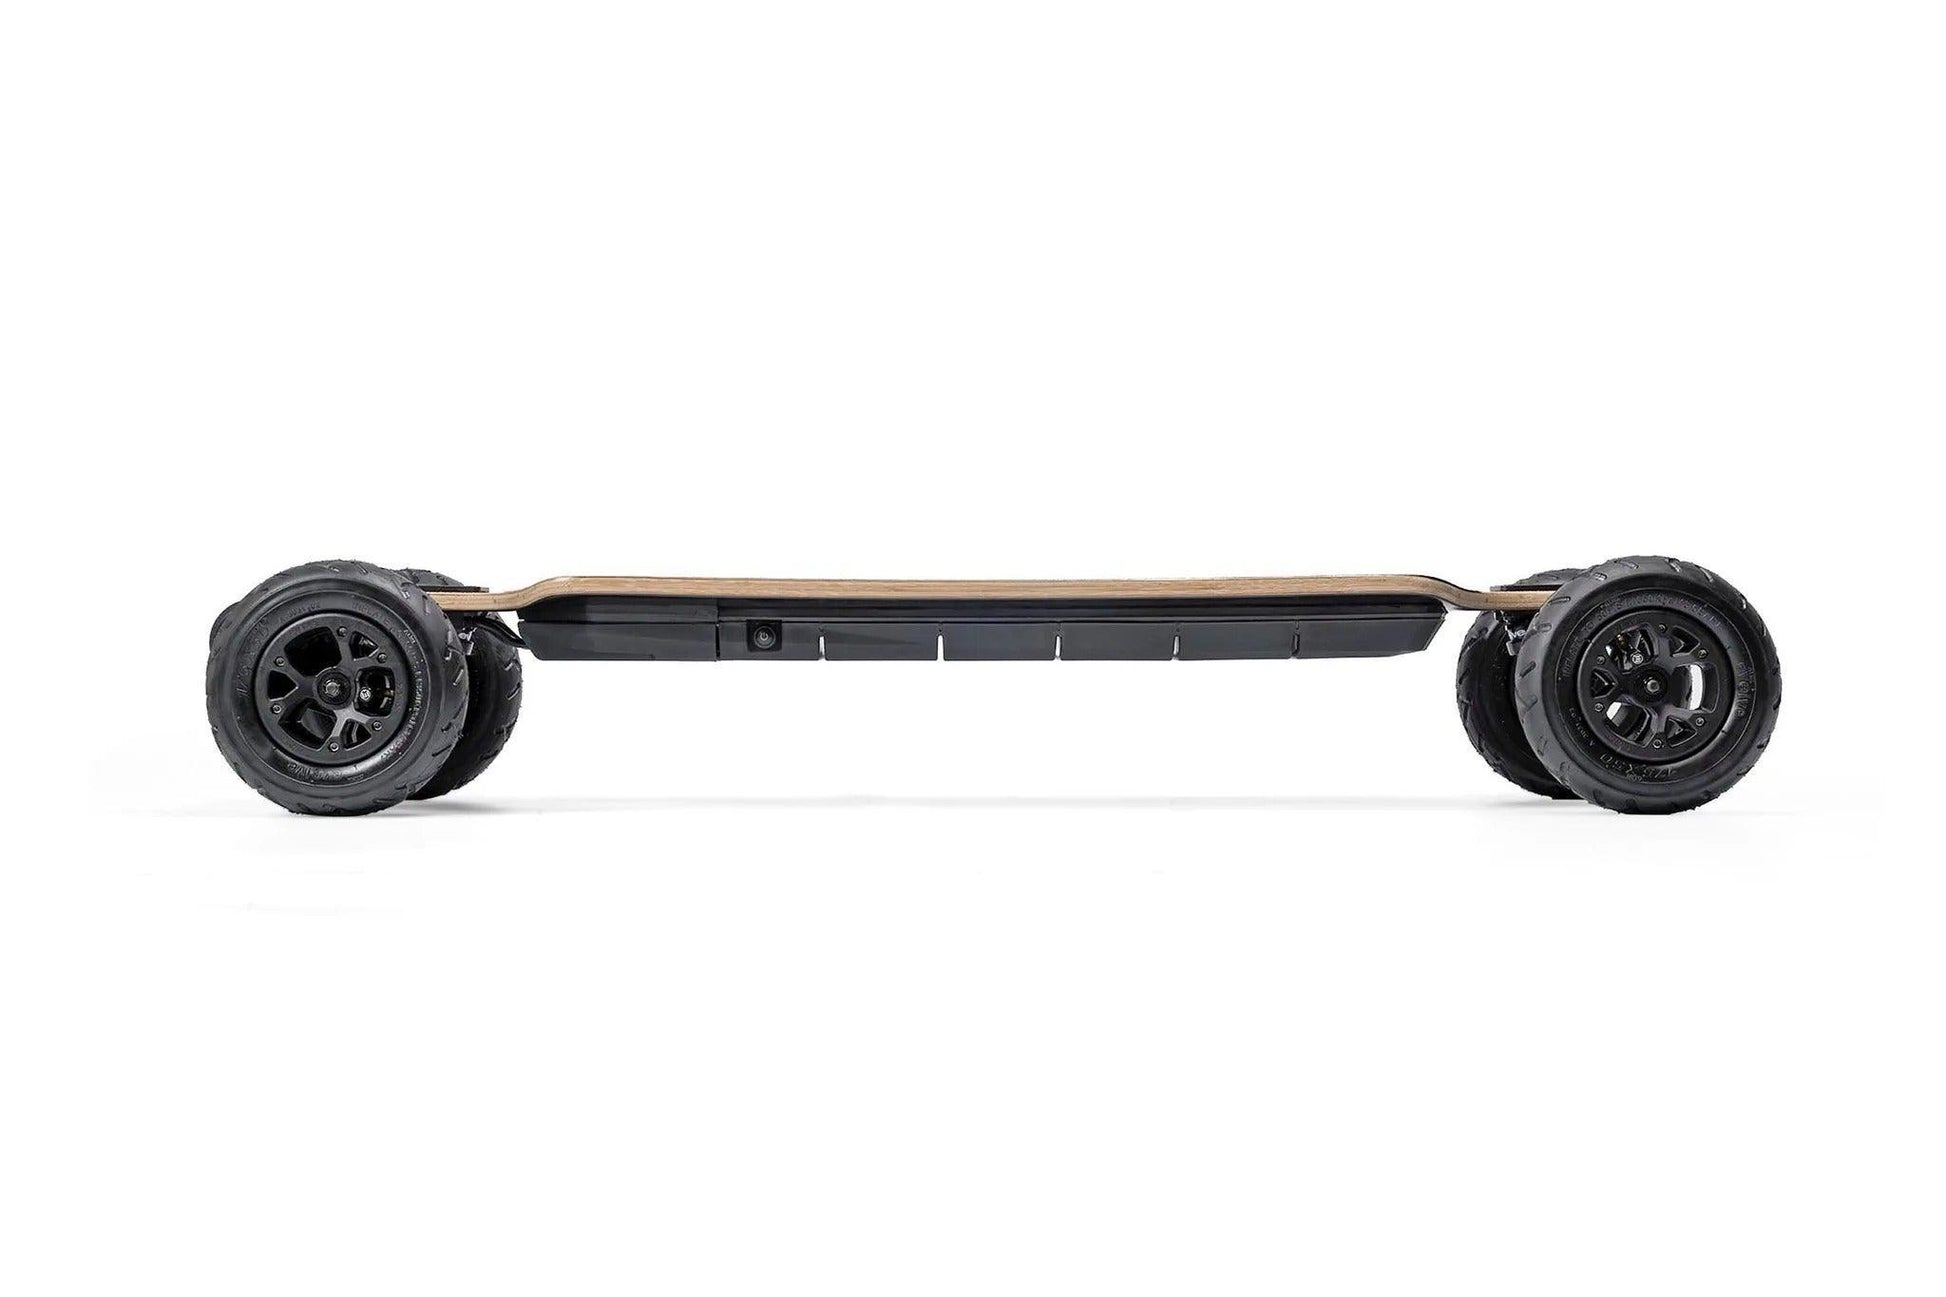 Evolve GTR Bamboo All Terrain Series 2 **On Sale** - skateboards - skateboards - Electric Monkey NZ